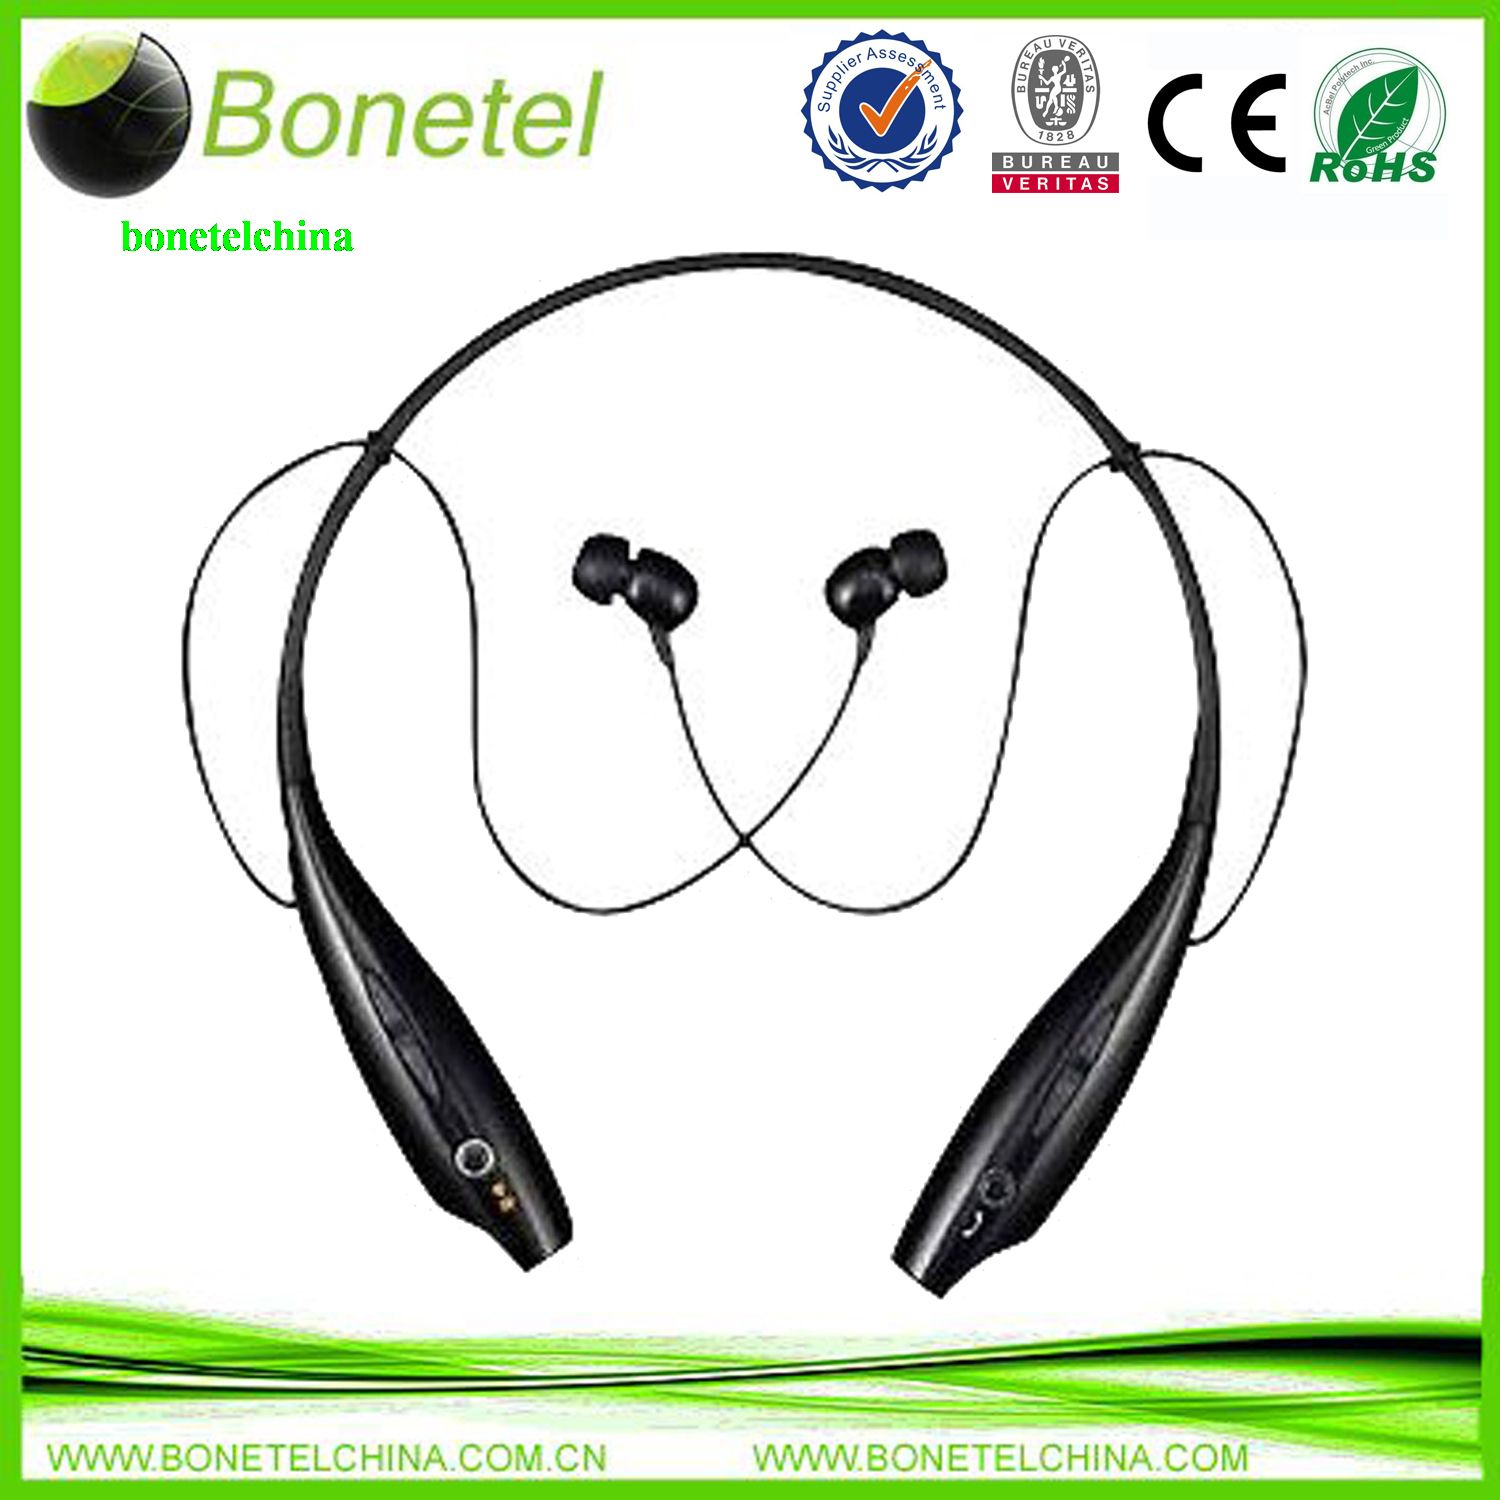 LG Tone HBS-700 Bluetooth Stereo Wireless HeadphonFor LG Tone HBS-700 Bluetooth Stereo Wireless Headphones Music Headset Earbuds es Music Headset Earbuds